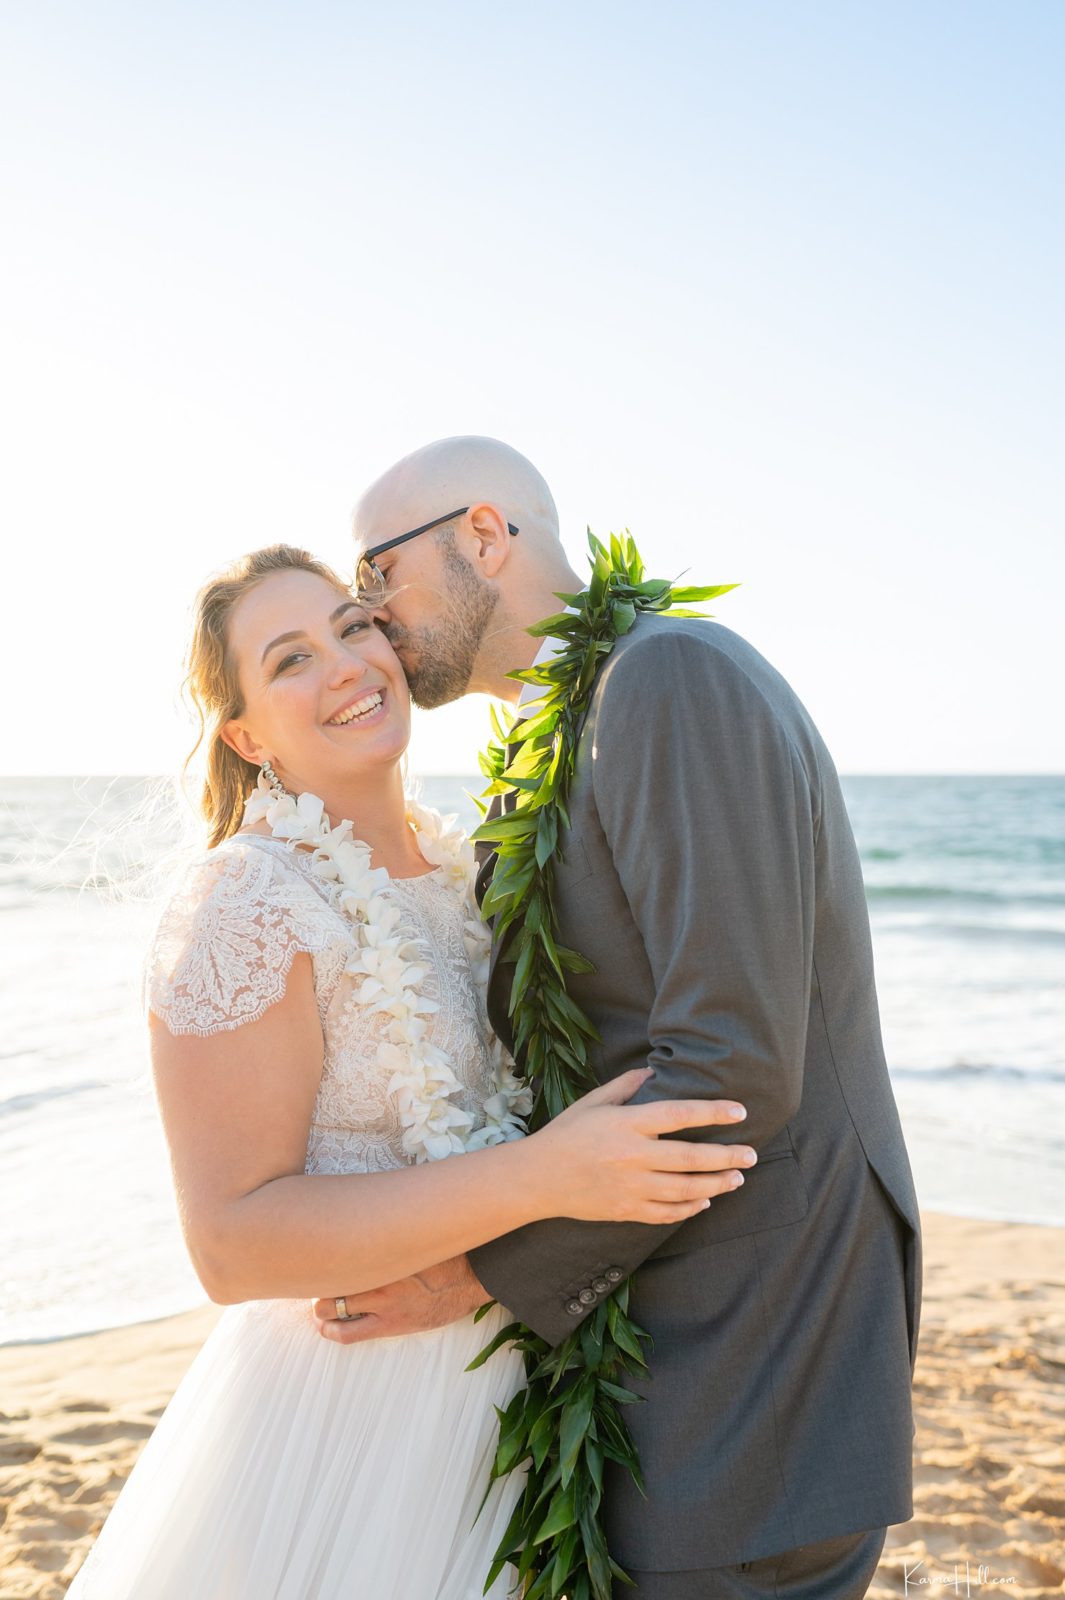 Upscale & Intimate - Ellen & Jason's Maui Venue Wedding